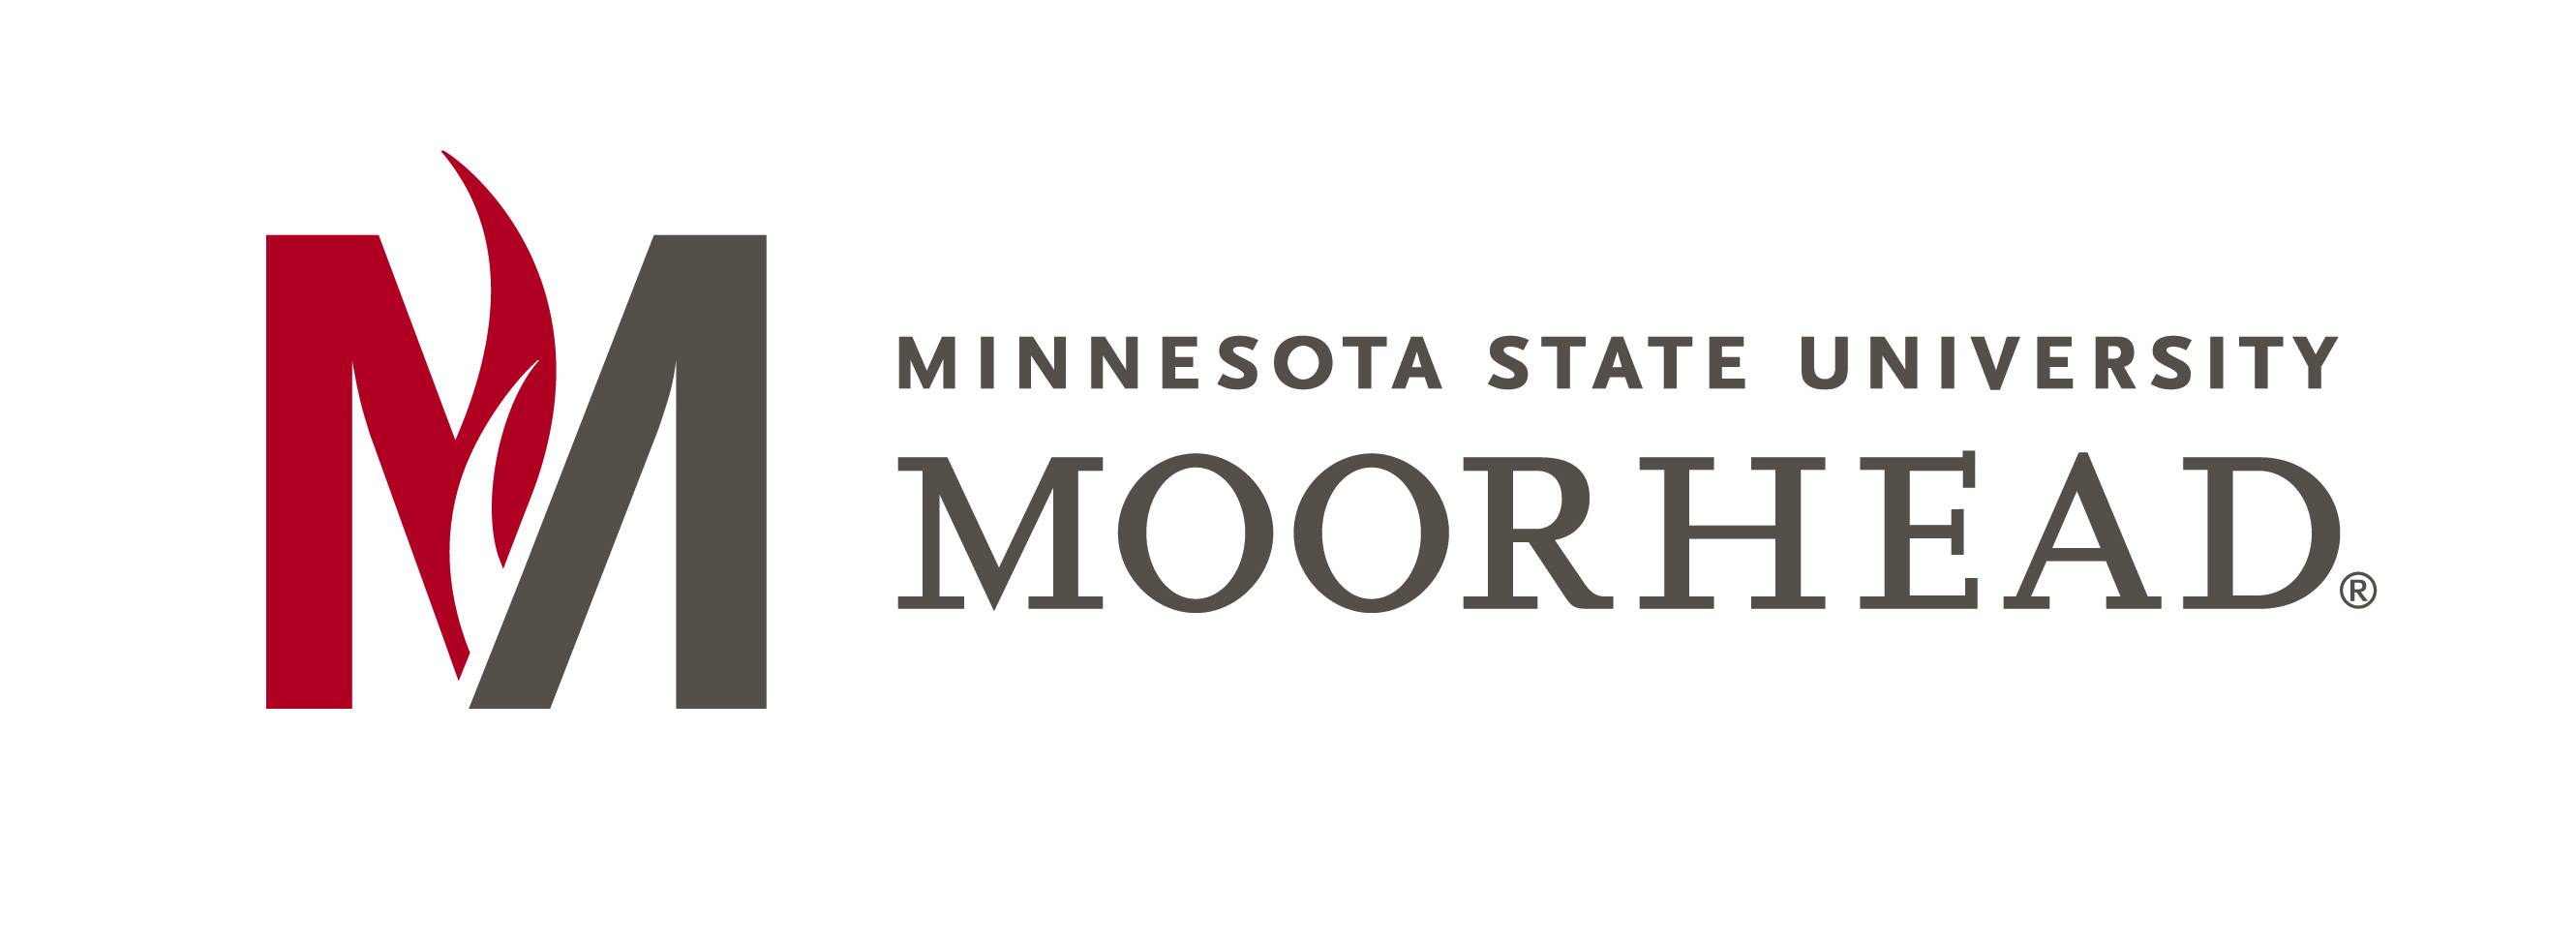 Minnesota State University Moorhead Logo photo - 1